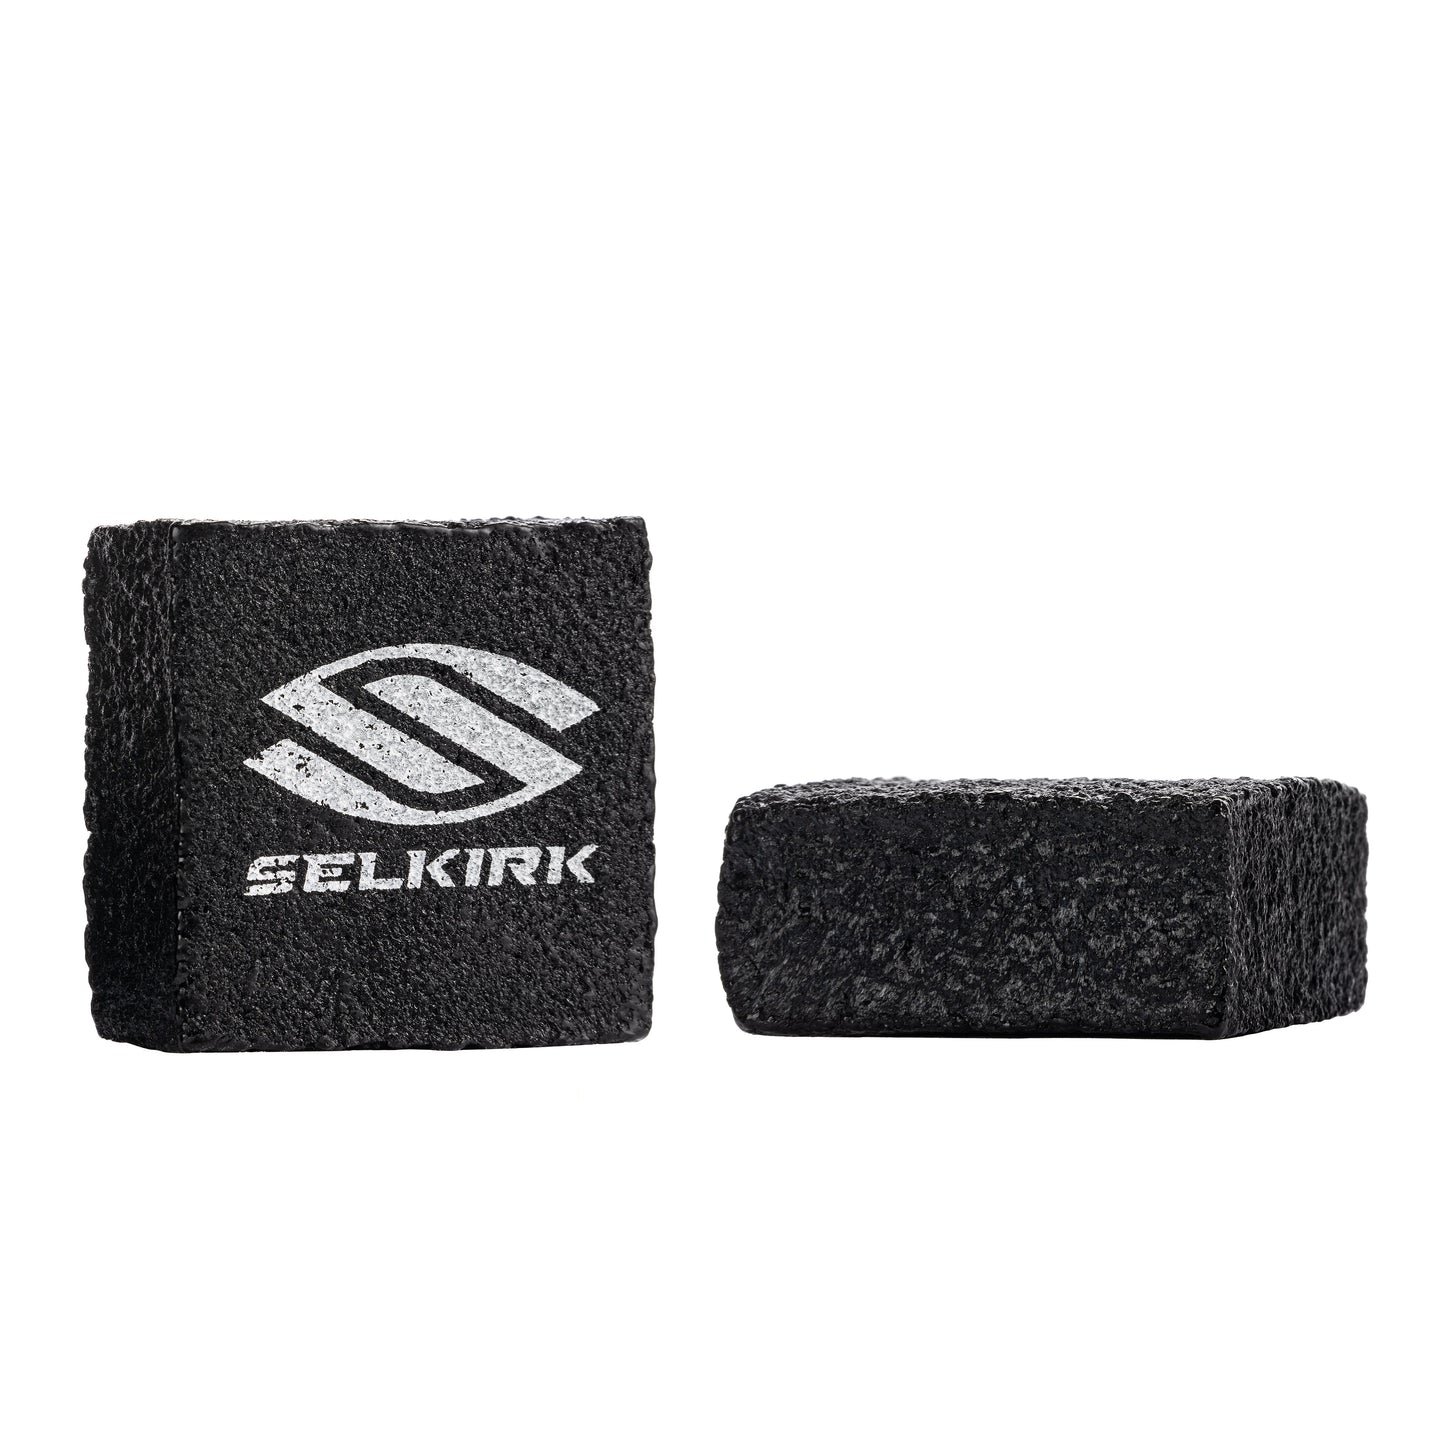 Selkirk Carbon Fiber Pickleball Cleaning Blocks - black - 2 pcs.